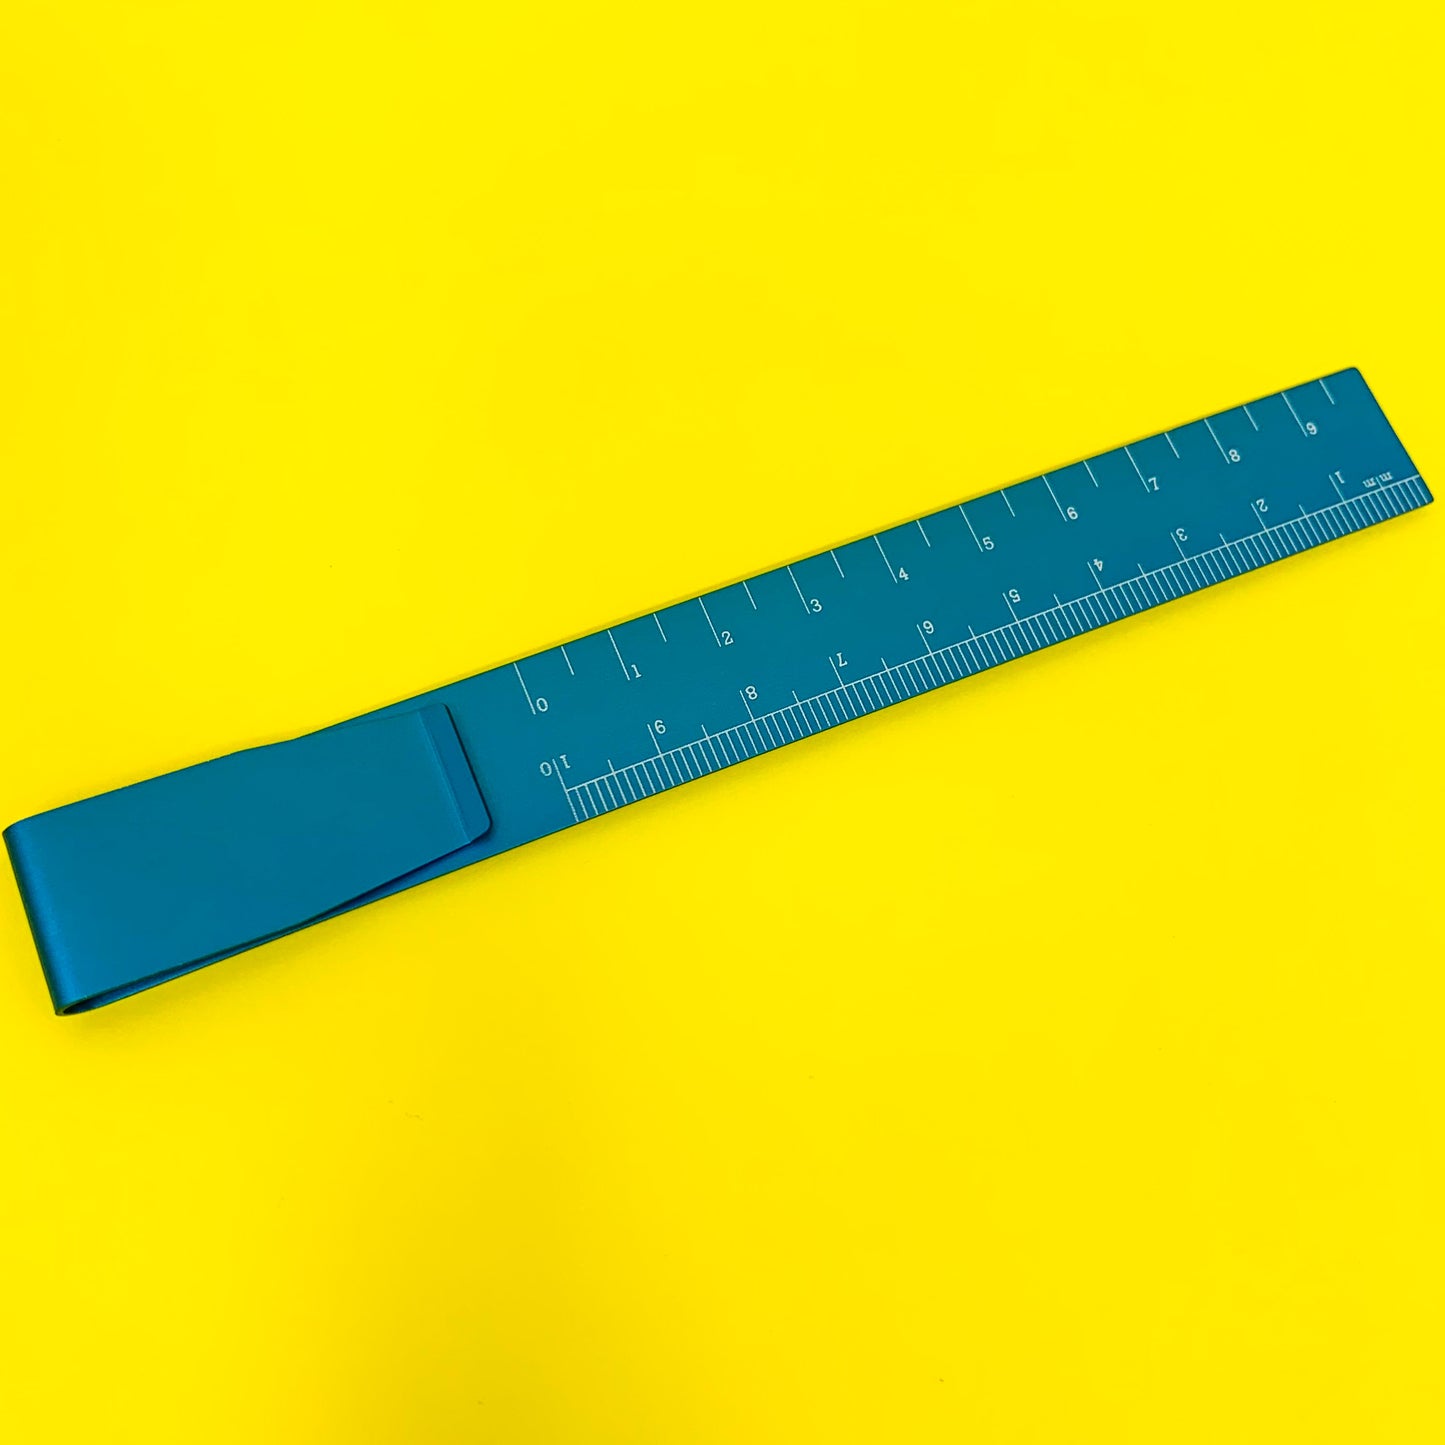 Mini Clippable Metric Ruler - 10cm